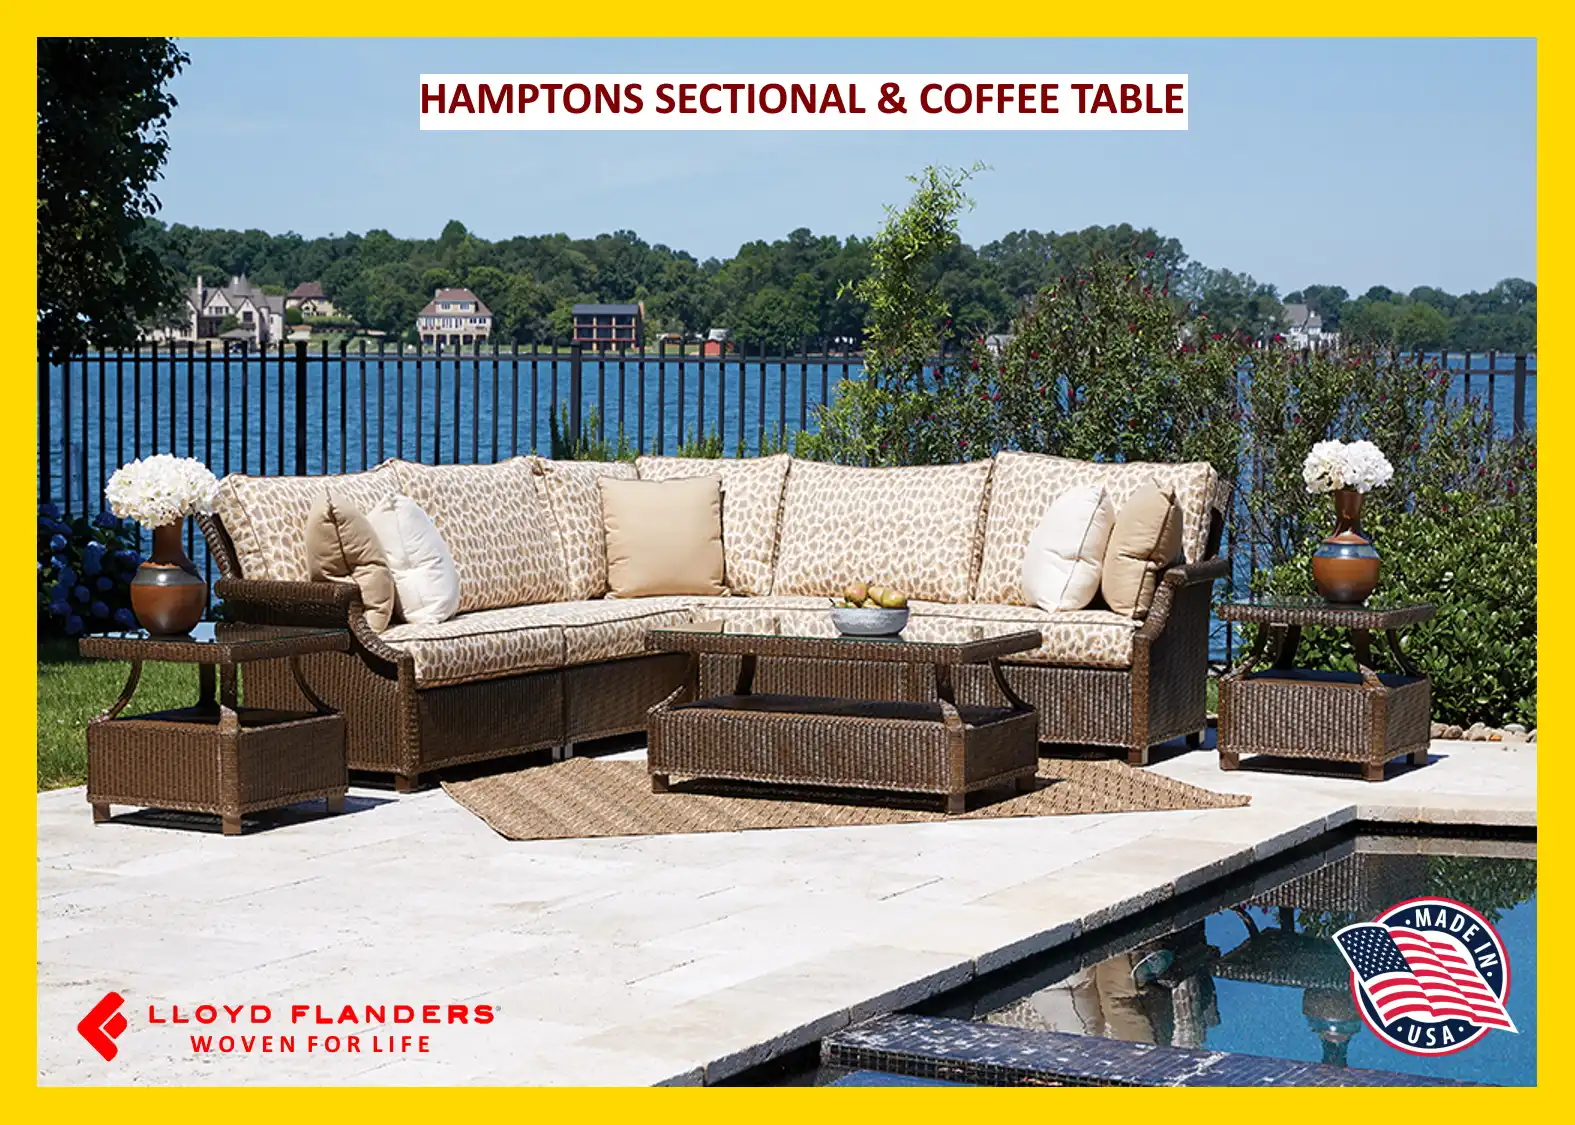 HAMPTONS SECTIONAL & COFFEE TABLE